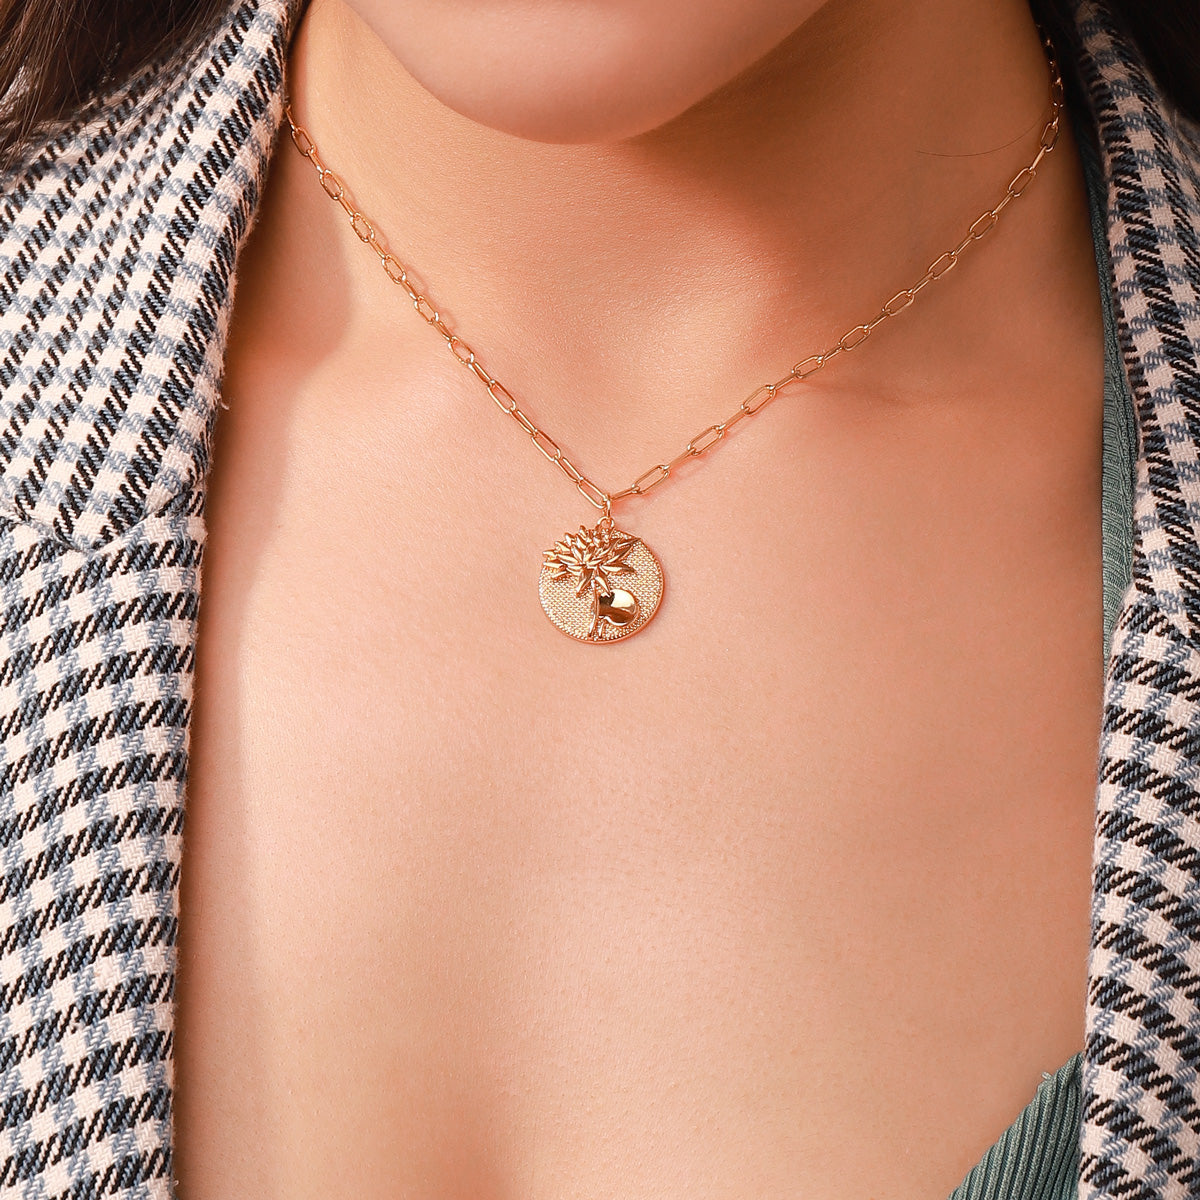 birth floral pendant lotus necklace july